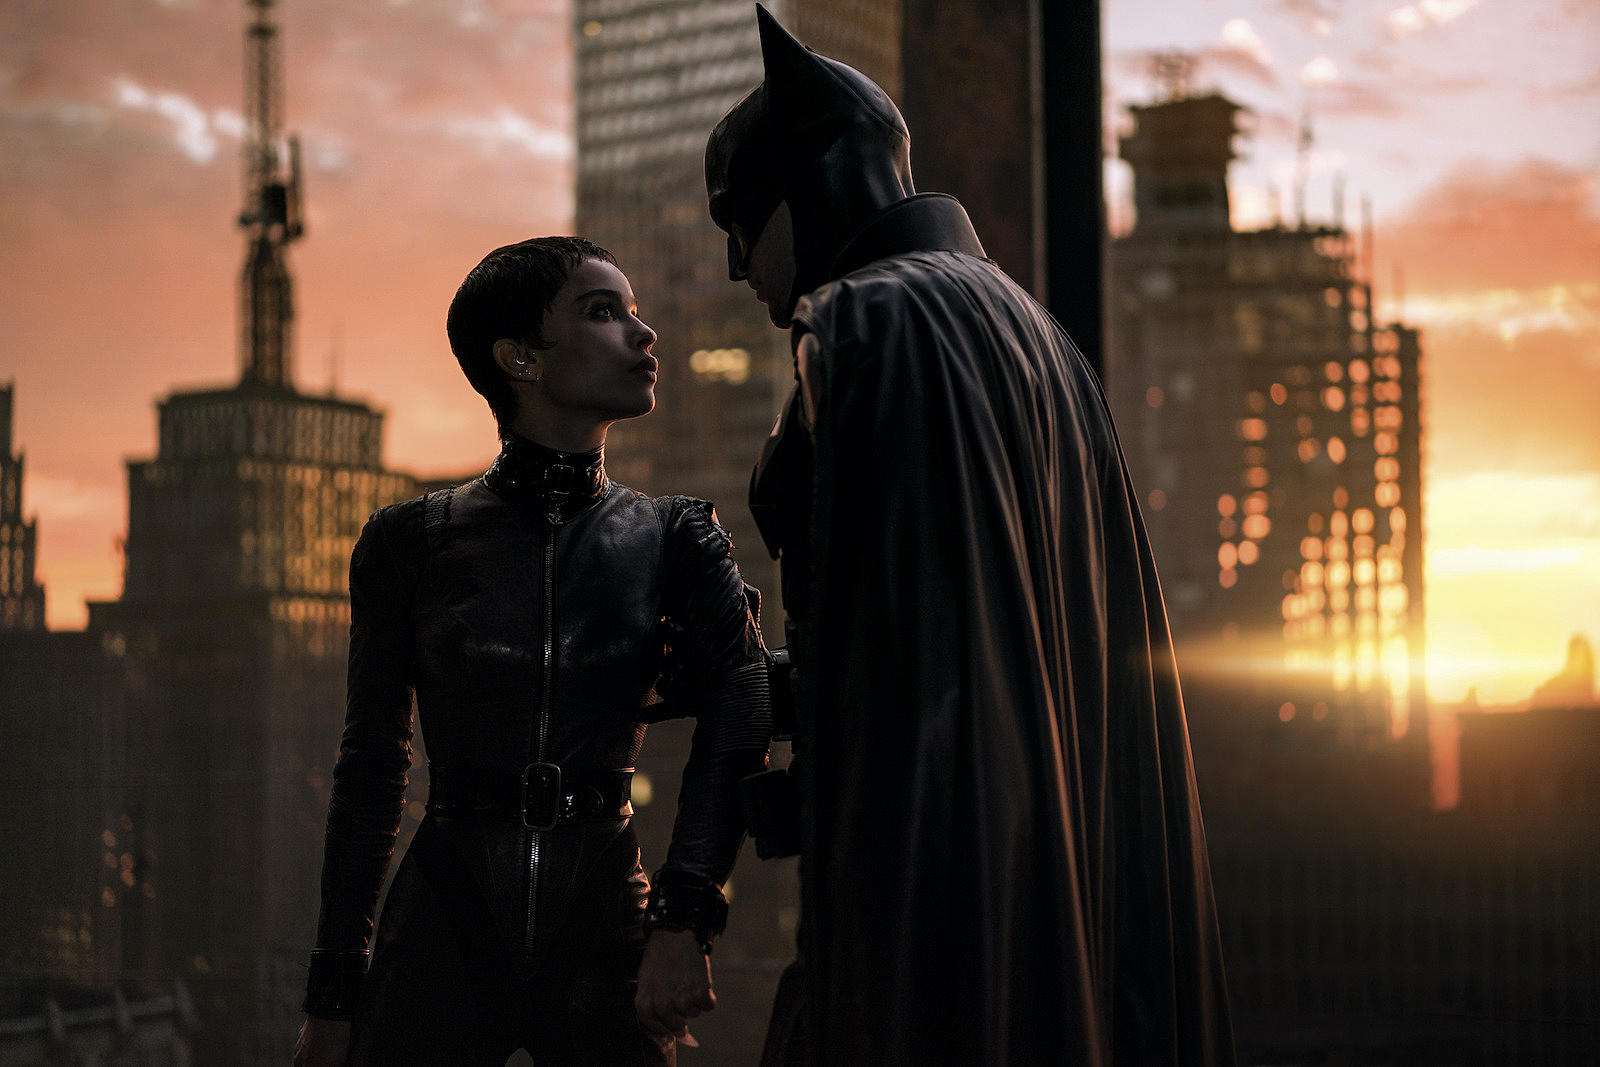 Gotham Knights TV Reviews: Critics Slam 'Messy' Batman Show